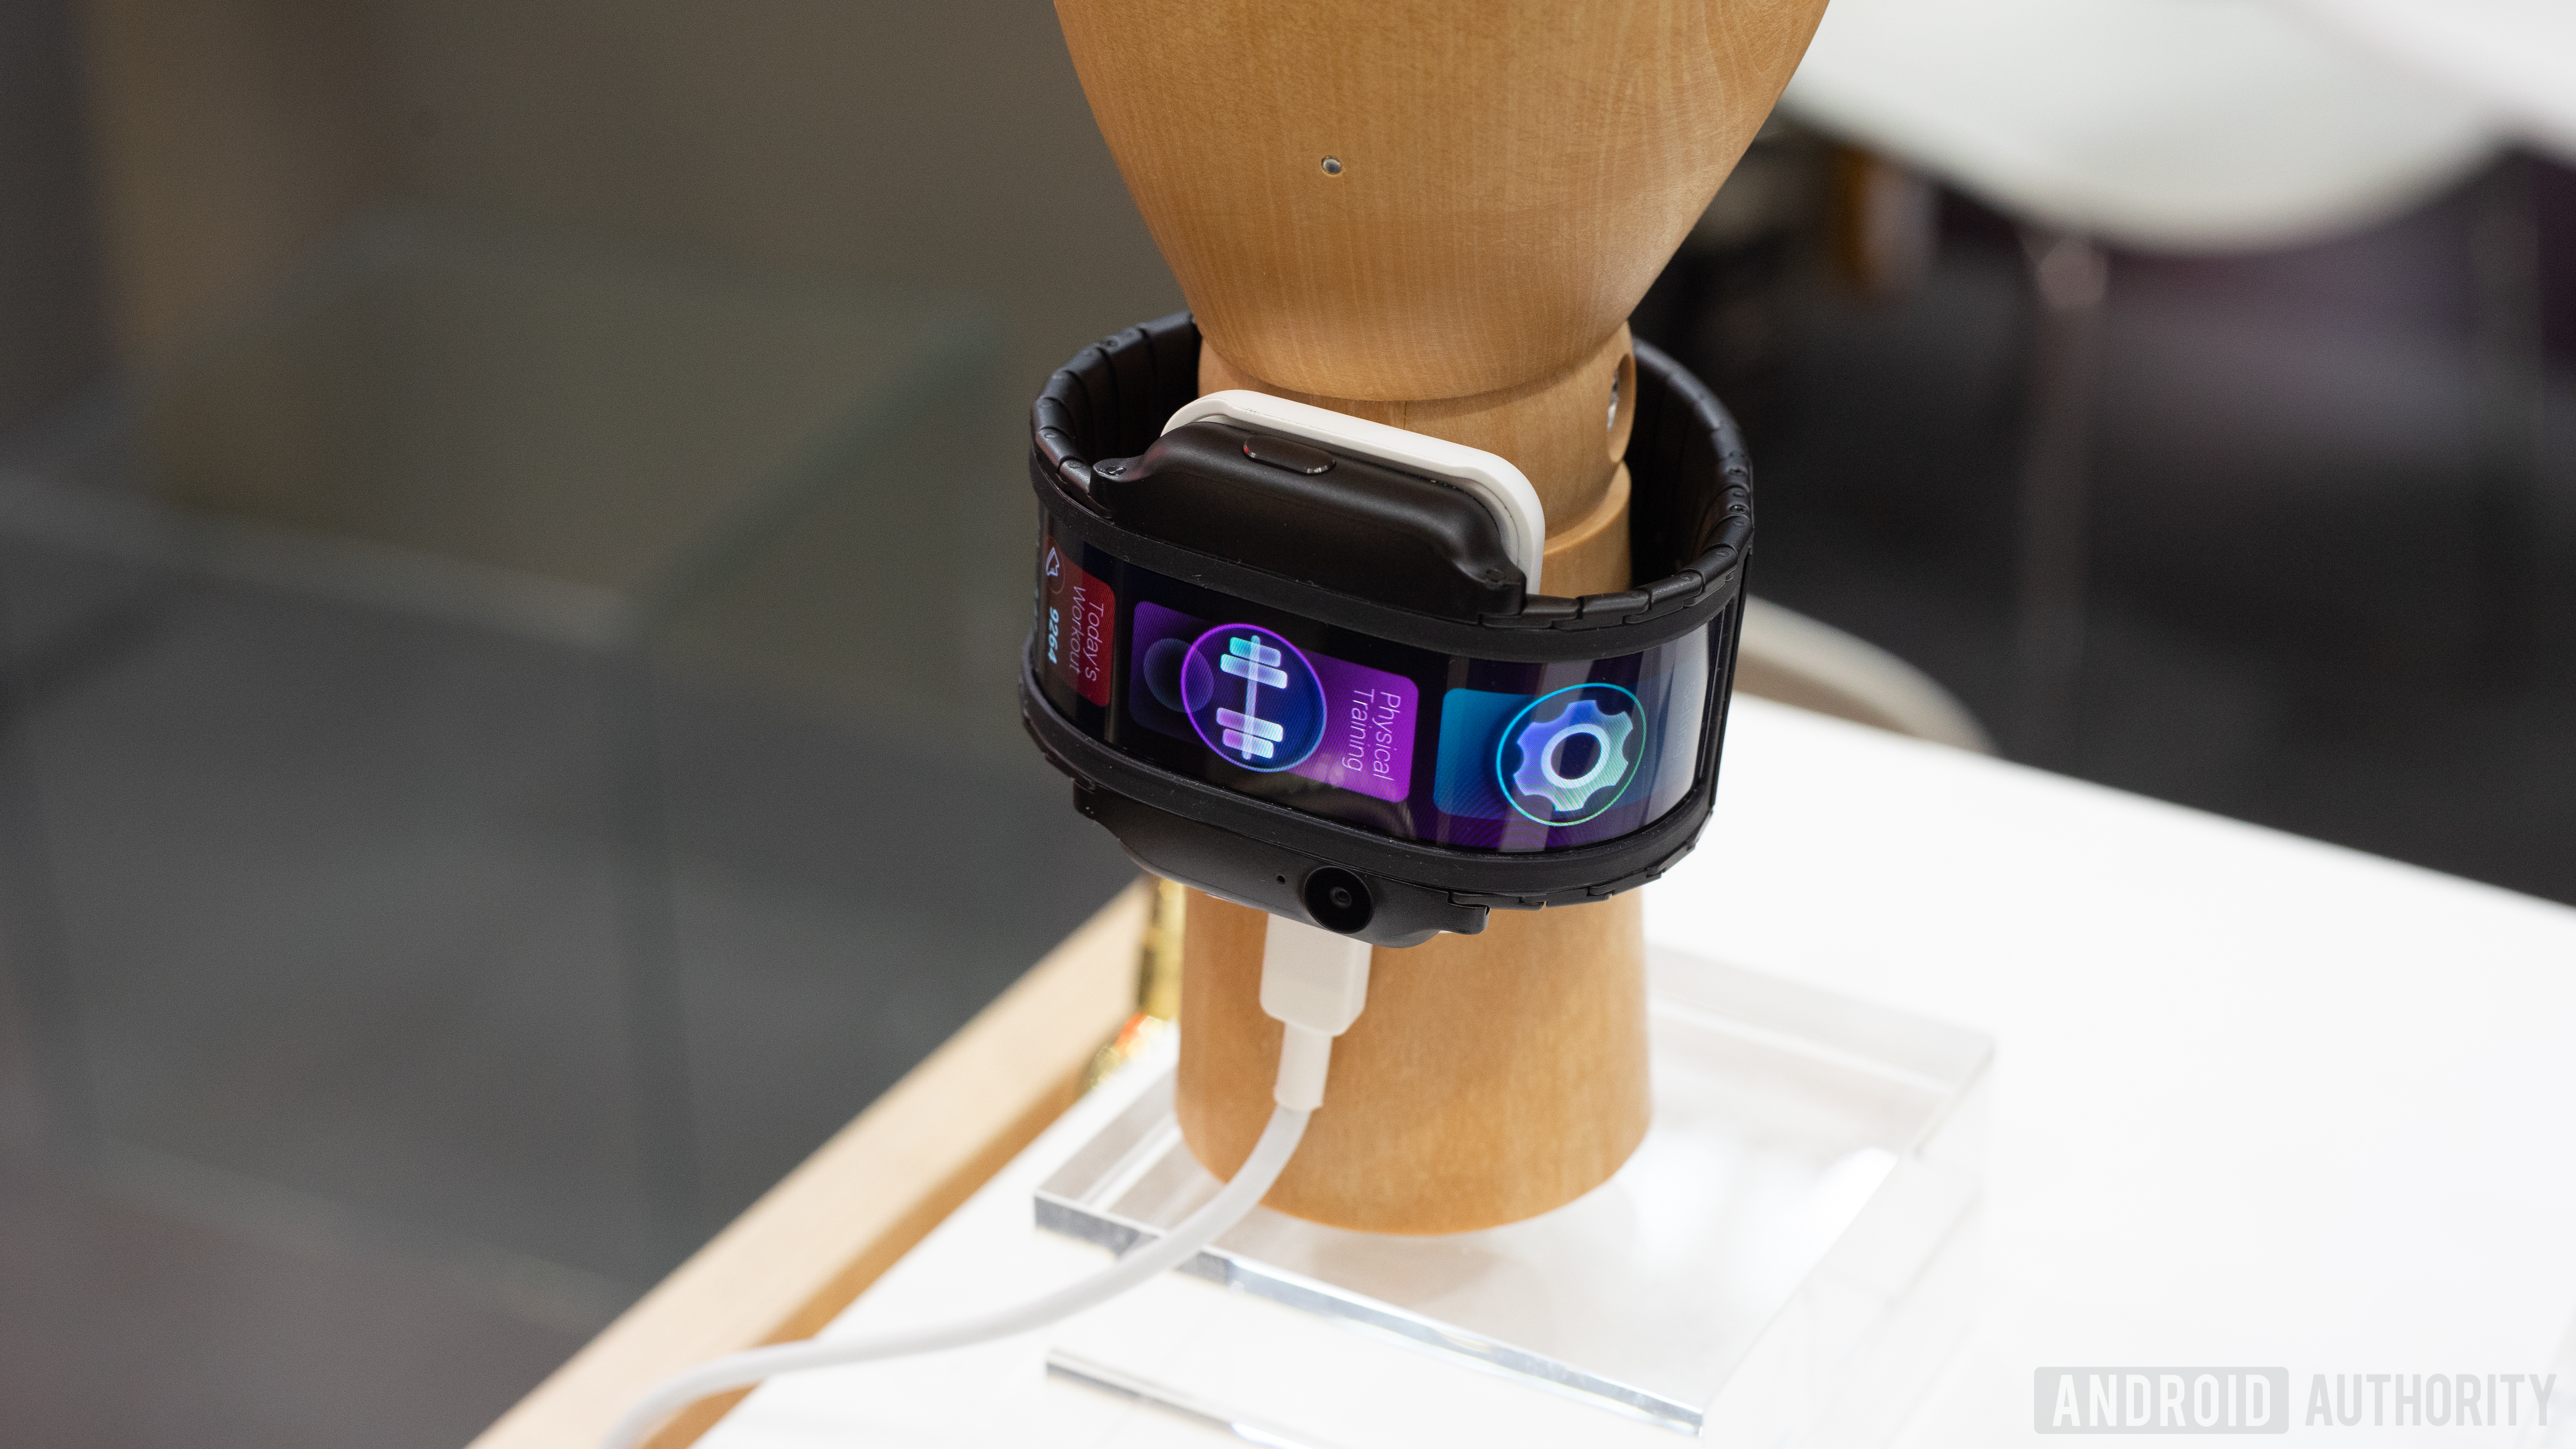 nubia Alpha smartwatch shown at IFA 2018